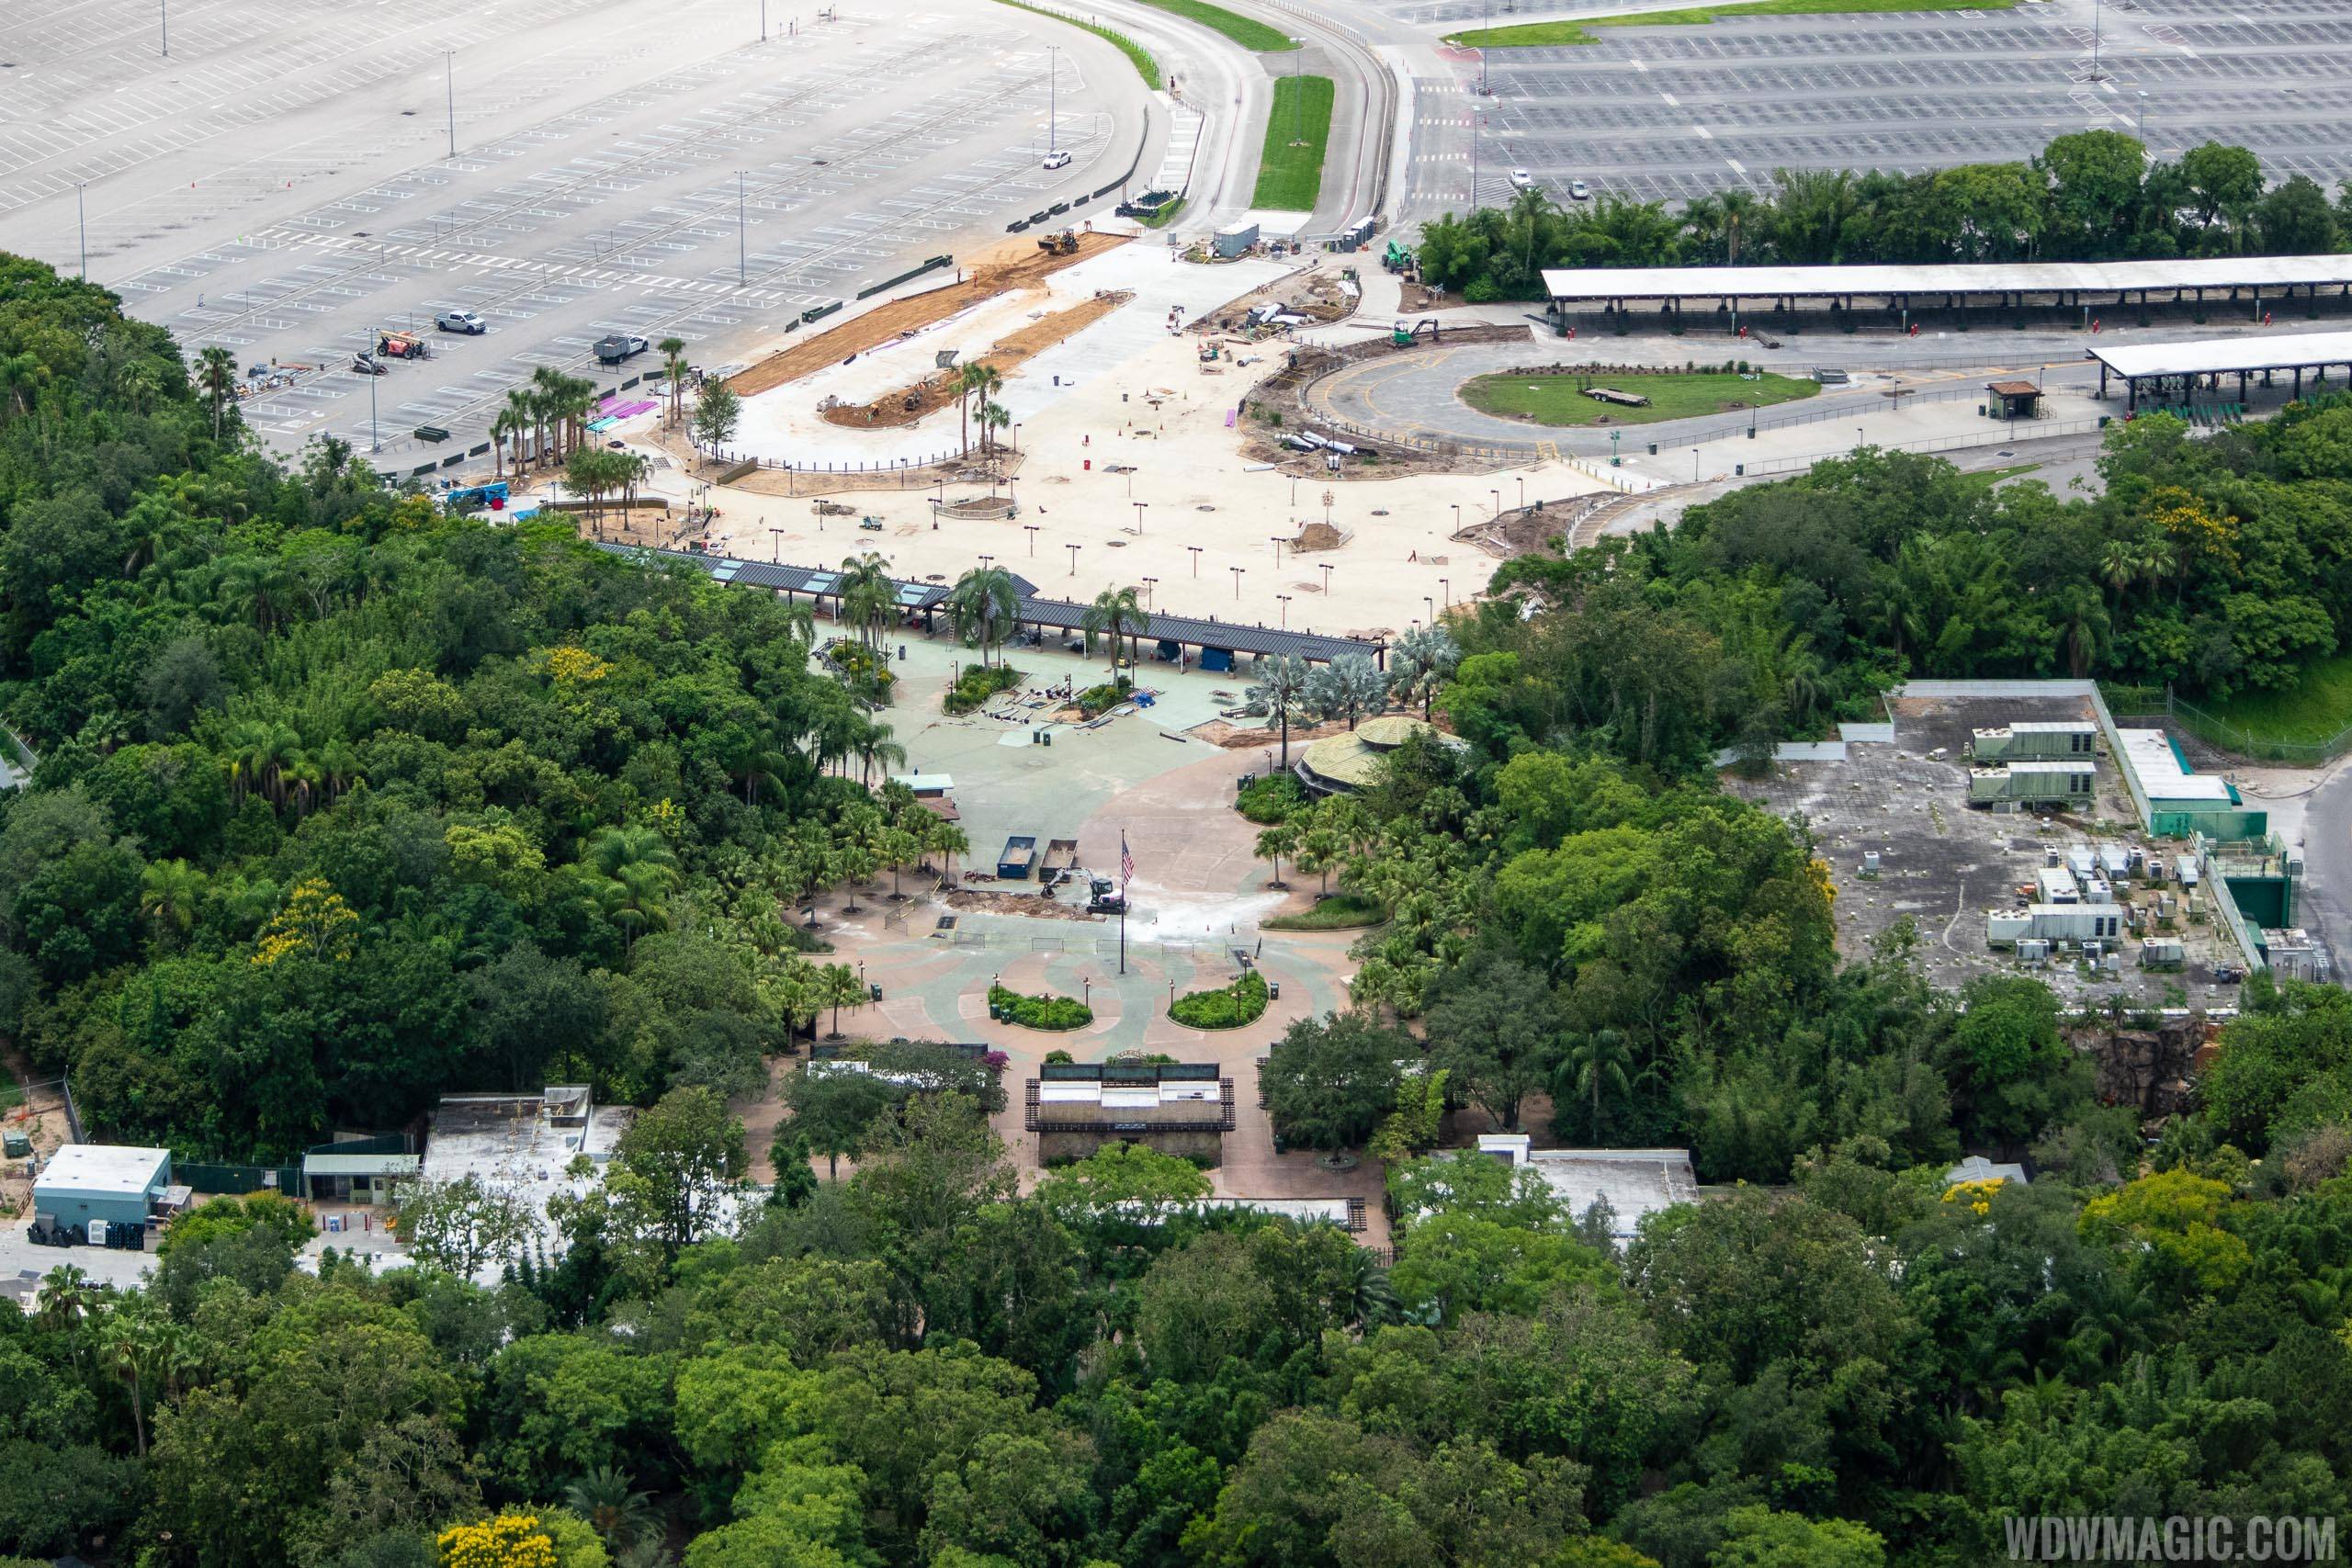 Disney's Animal Kingdom main entrance construction - June 2020